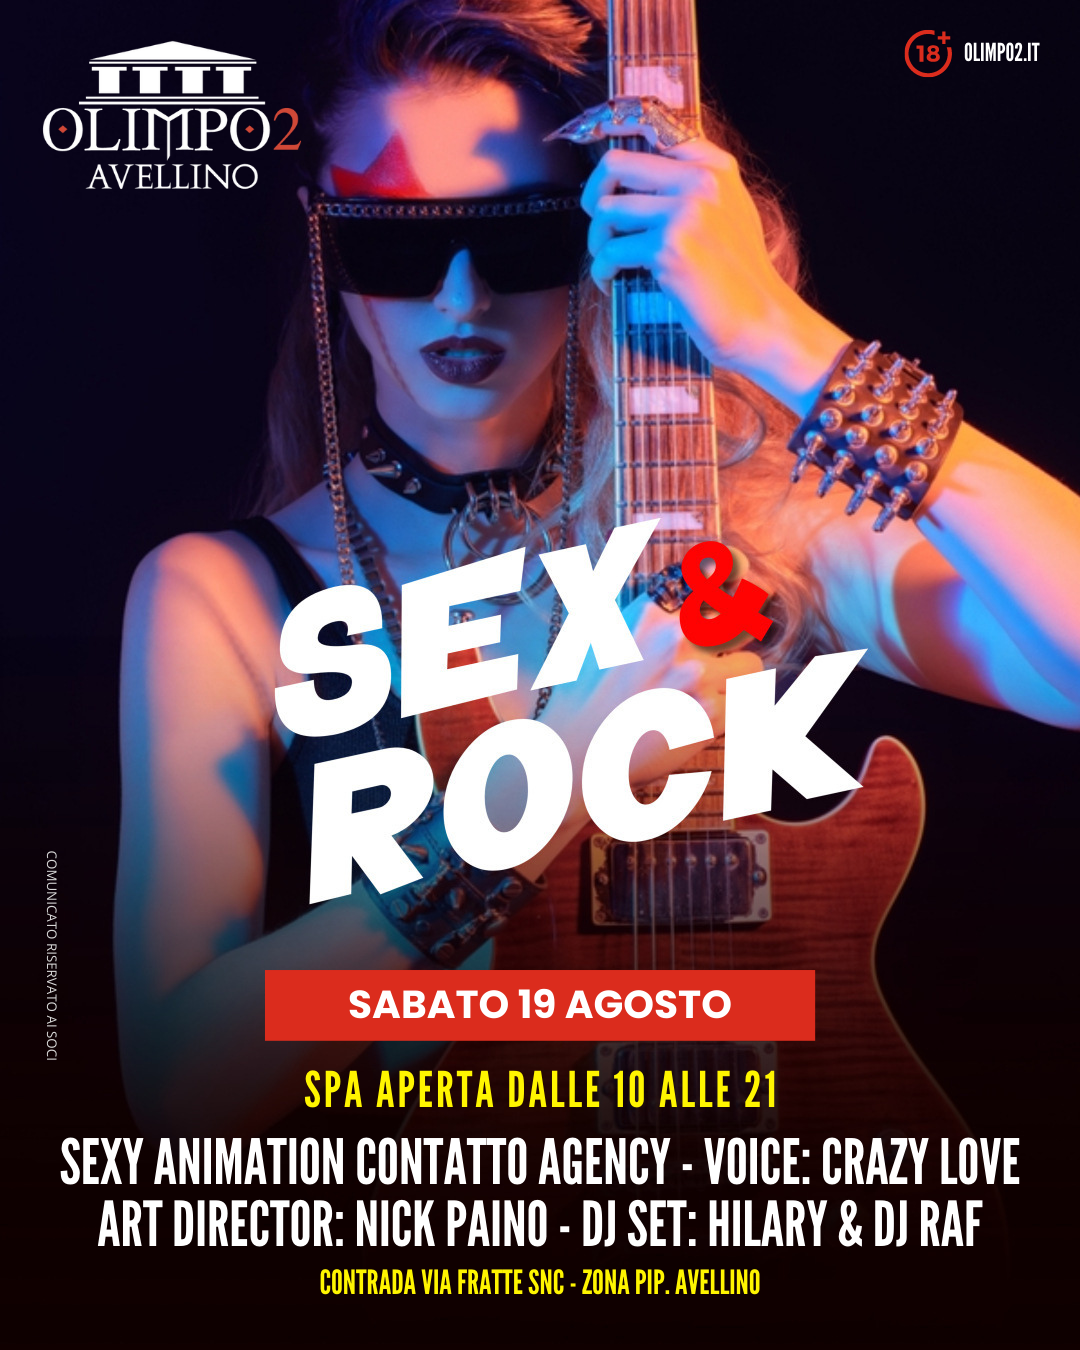 sex & rock party olimpo 2 avellino